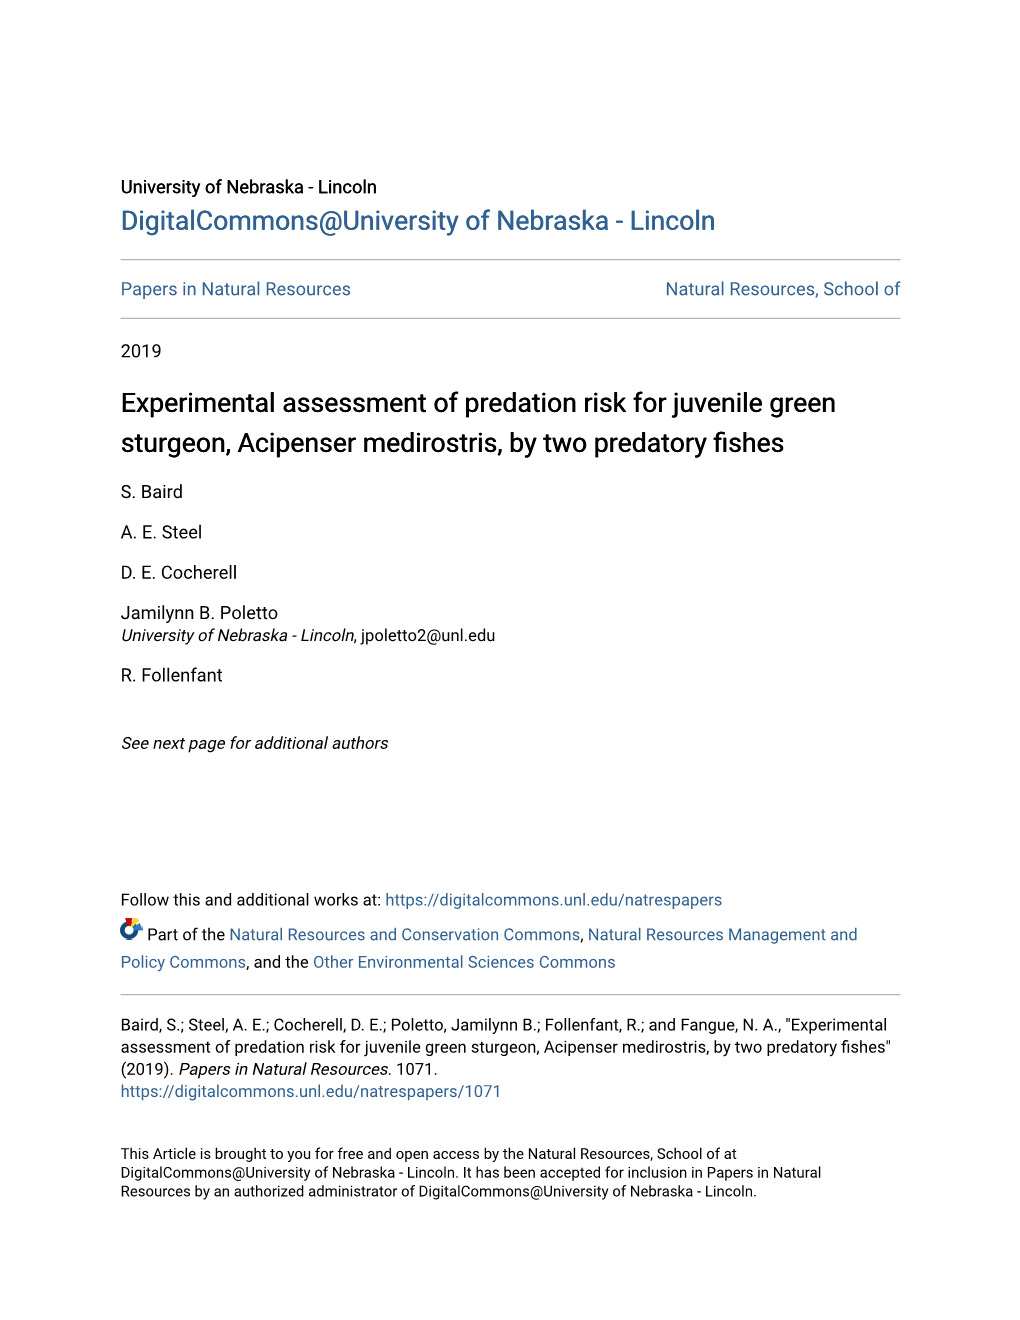 Experimental Assessment of Predation Risk for Juvenile Green Sturgeon, Acipenser Medirostris, by Two Predatory Fishes